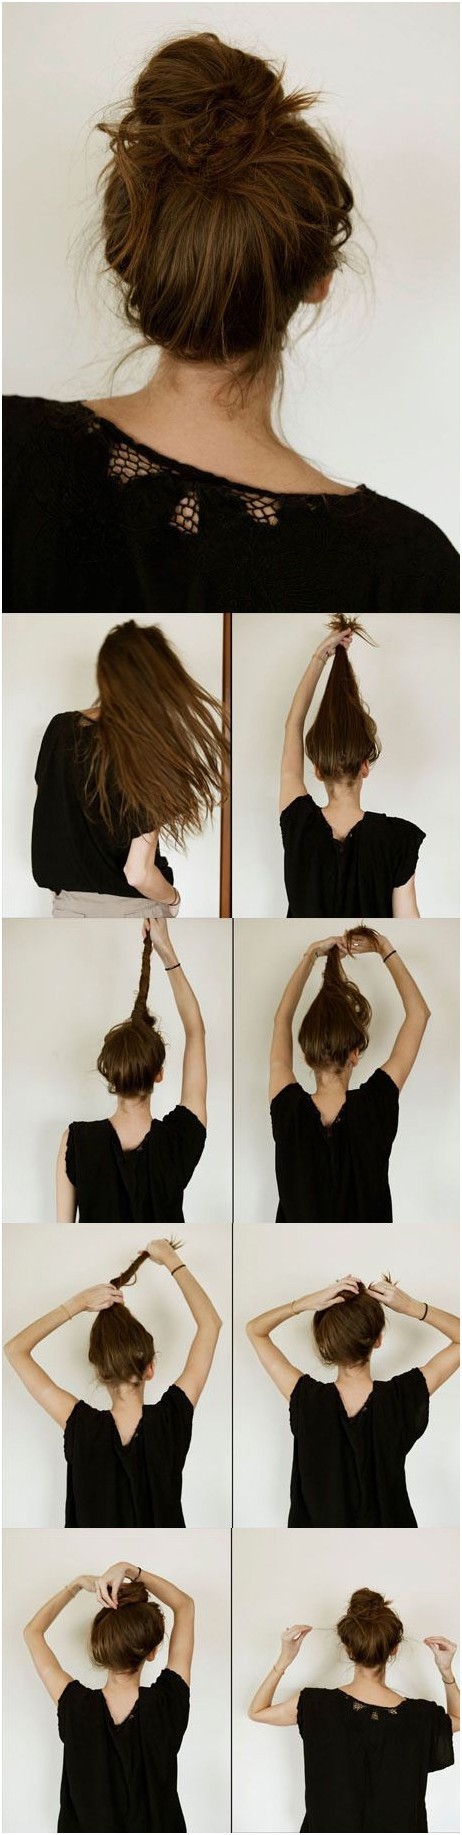 11 Wonderful Everyday Hairstyles for Long Hair - Pretty ...